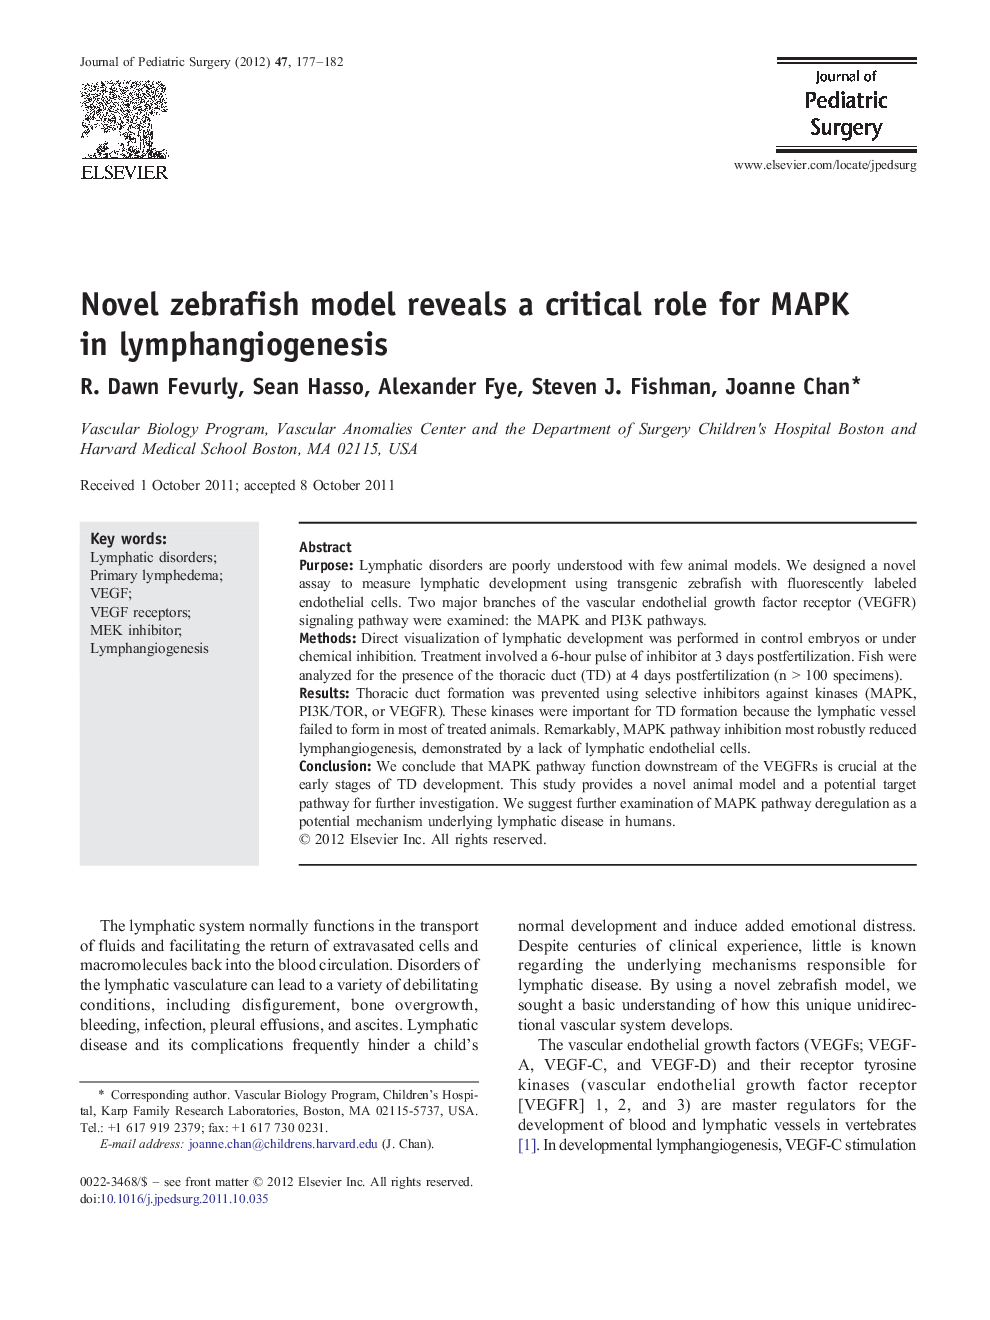 Novel zebrafish model reveals a critical role for MAPK in lymphangiogenesis